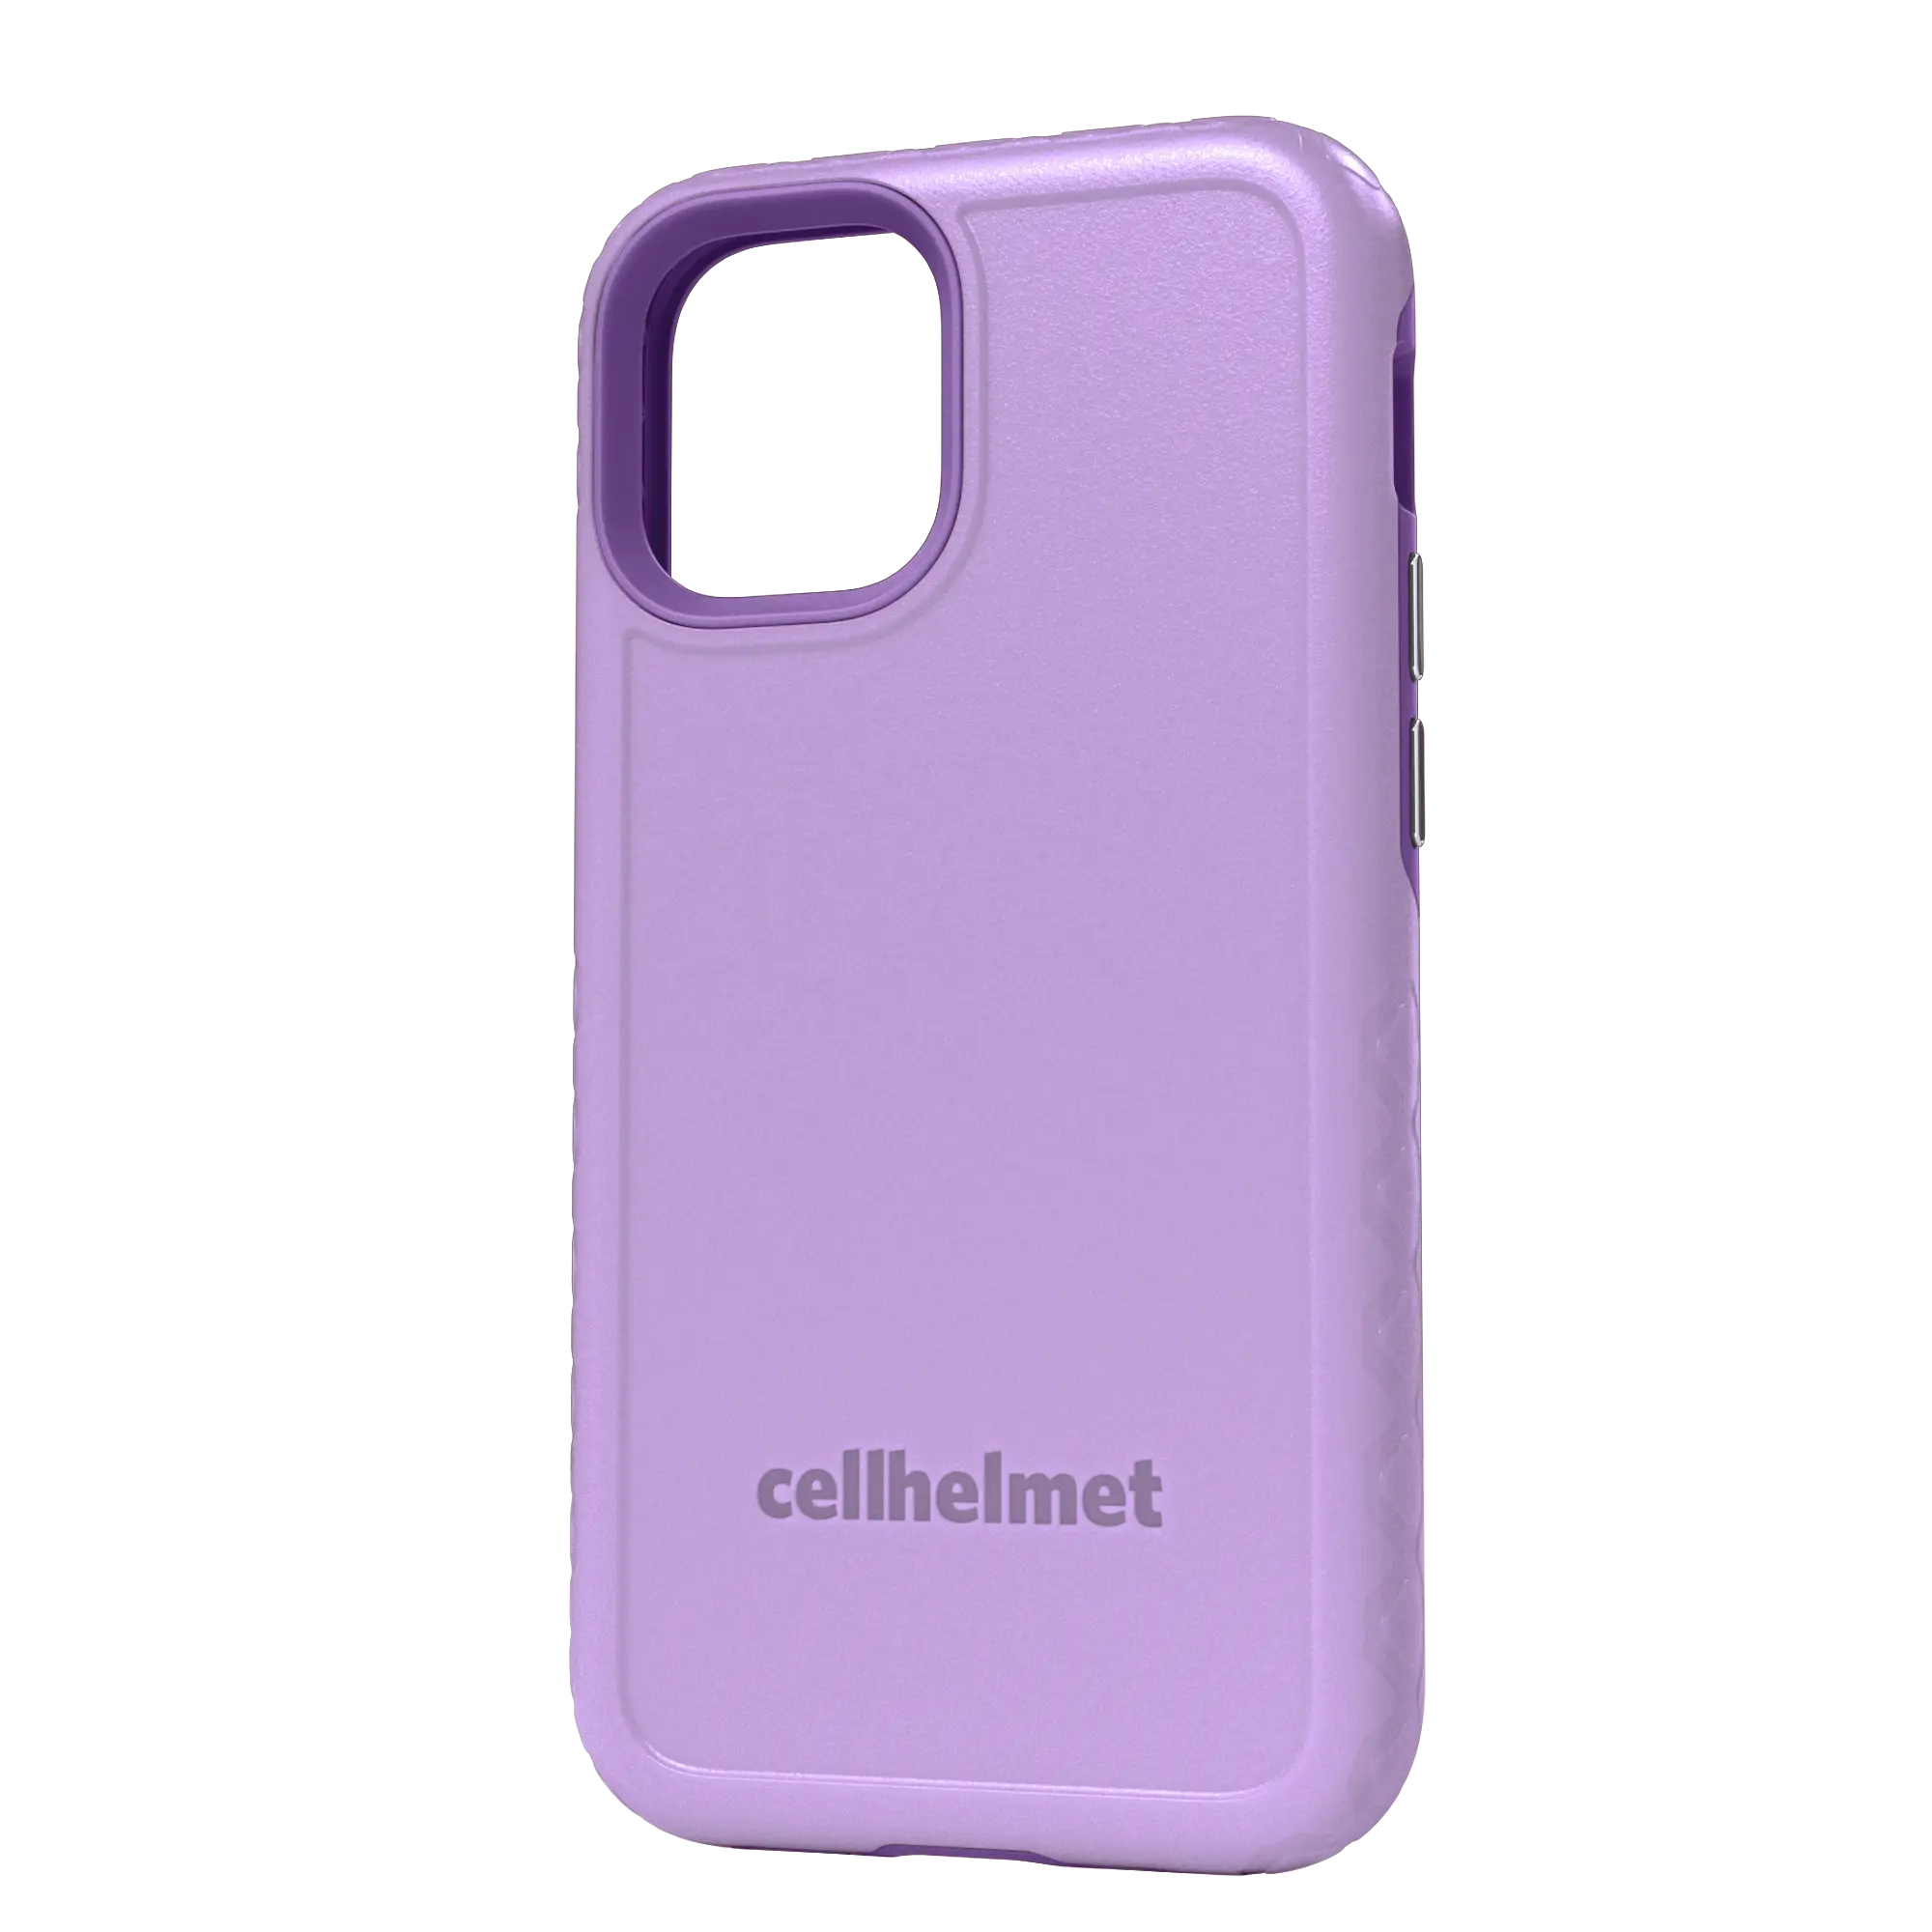 Purple cellhelmet Personalized Case for iPhone 12 Mini